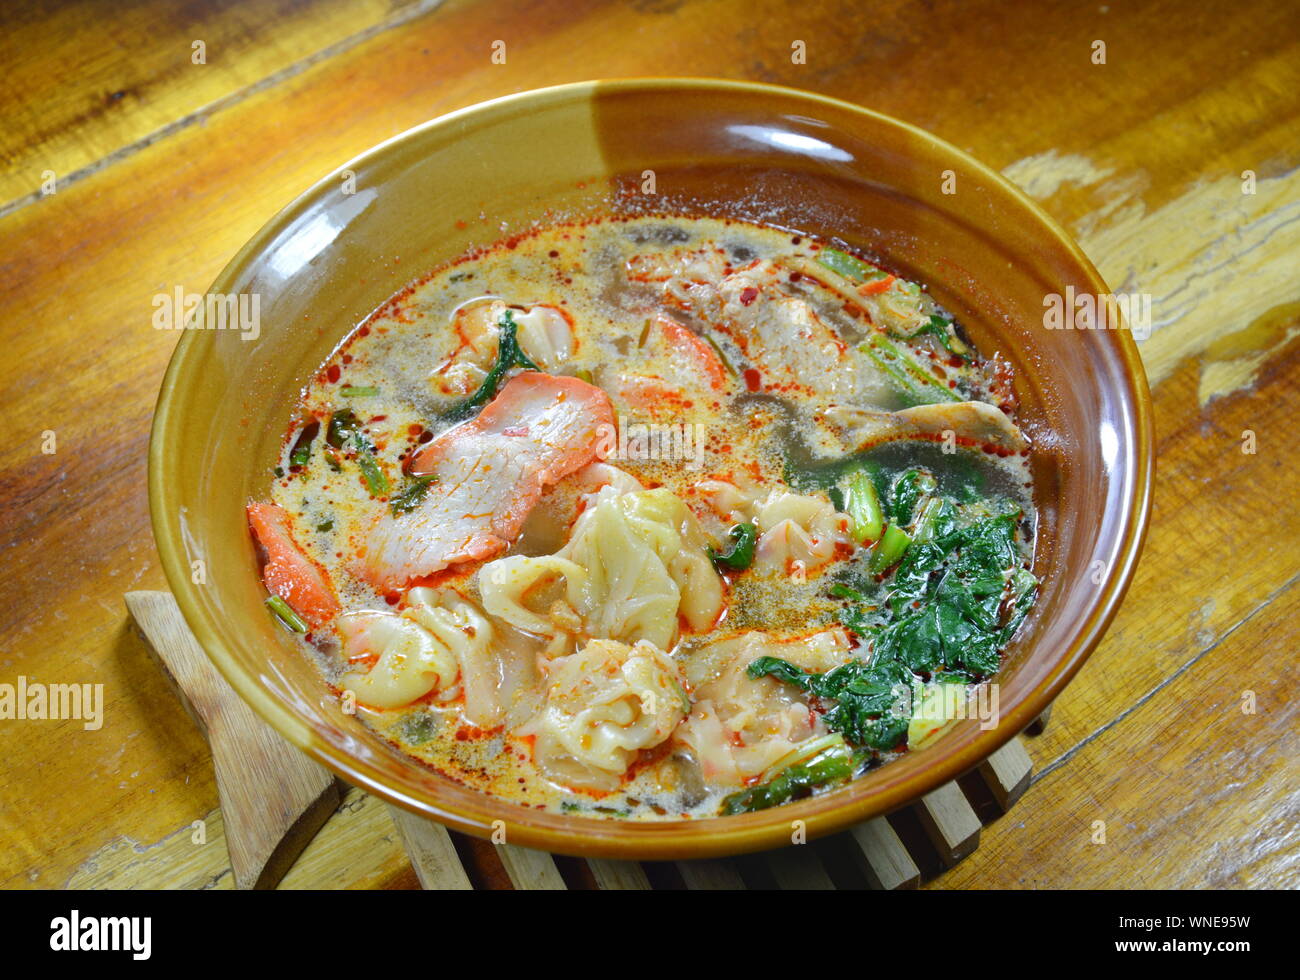 Chinese pork dumpling in Tom Yum soup Stock Photo - Alamy